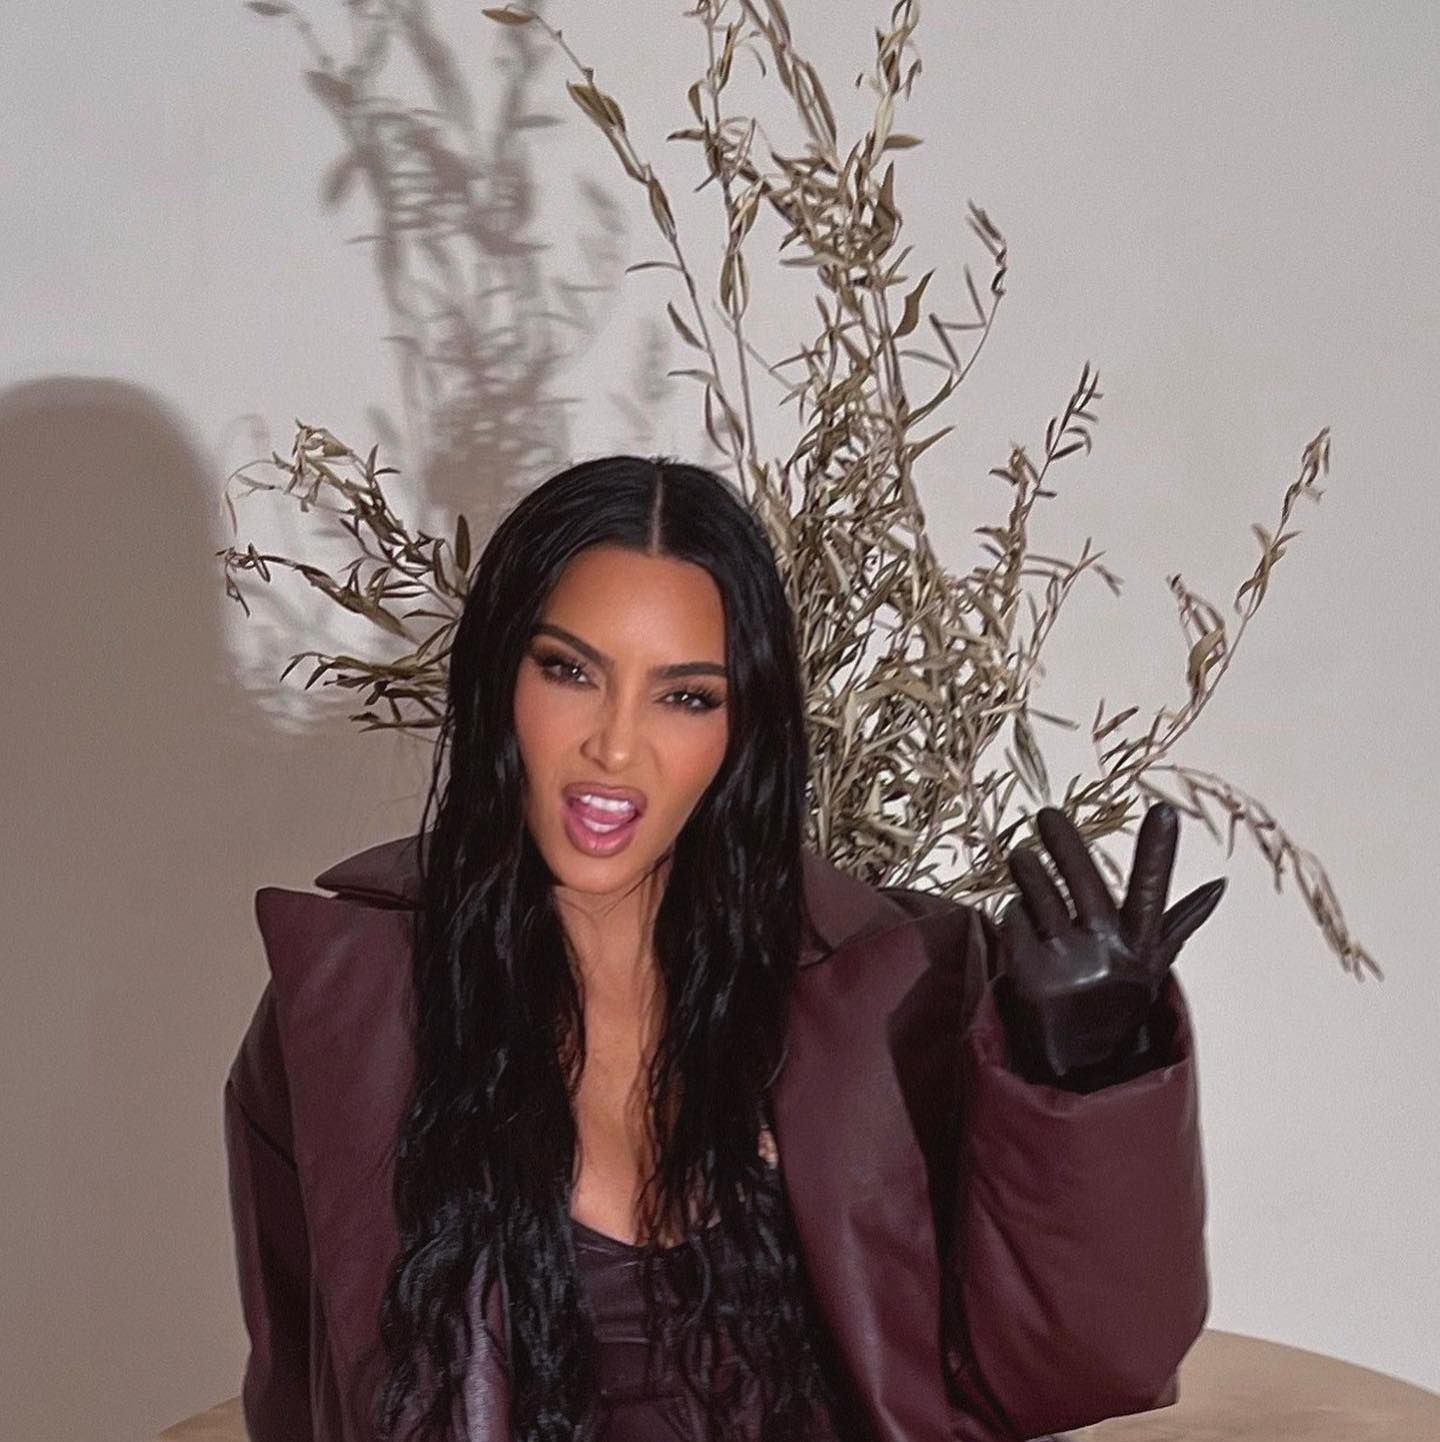 Kim Kardashian Released a Pantry Tour and We're All Making the Same Joke